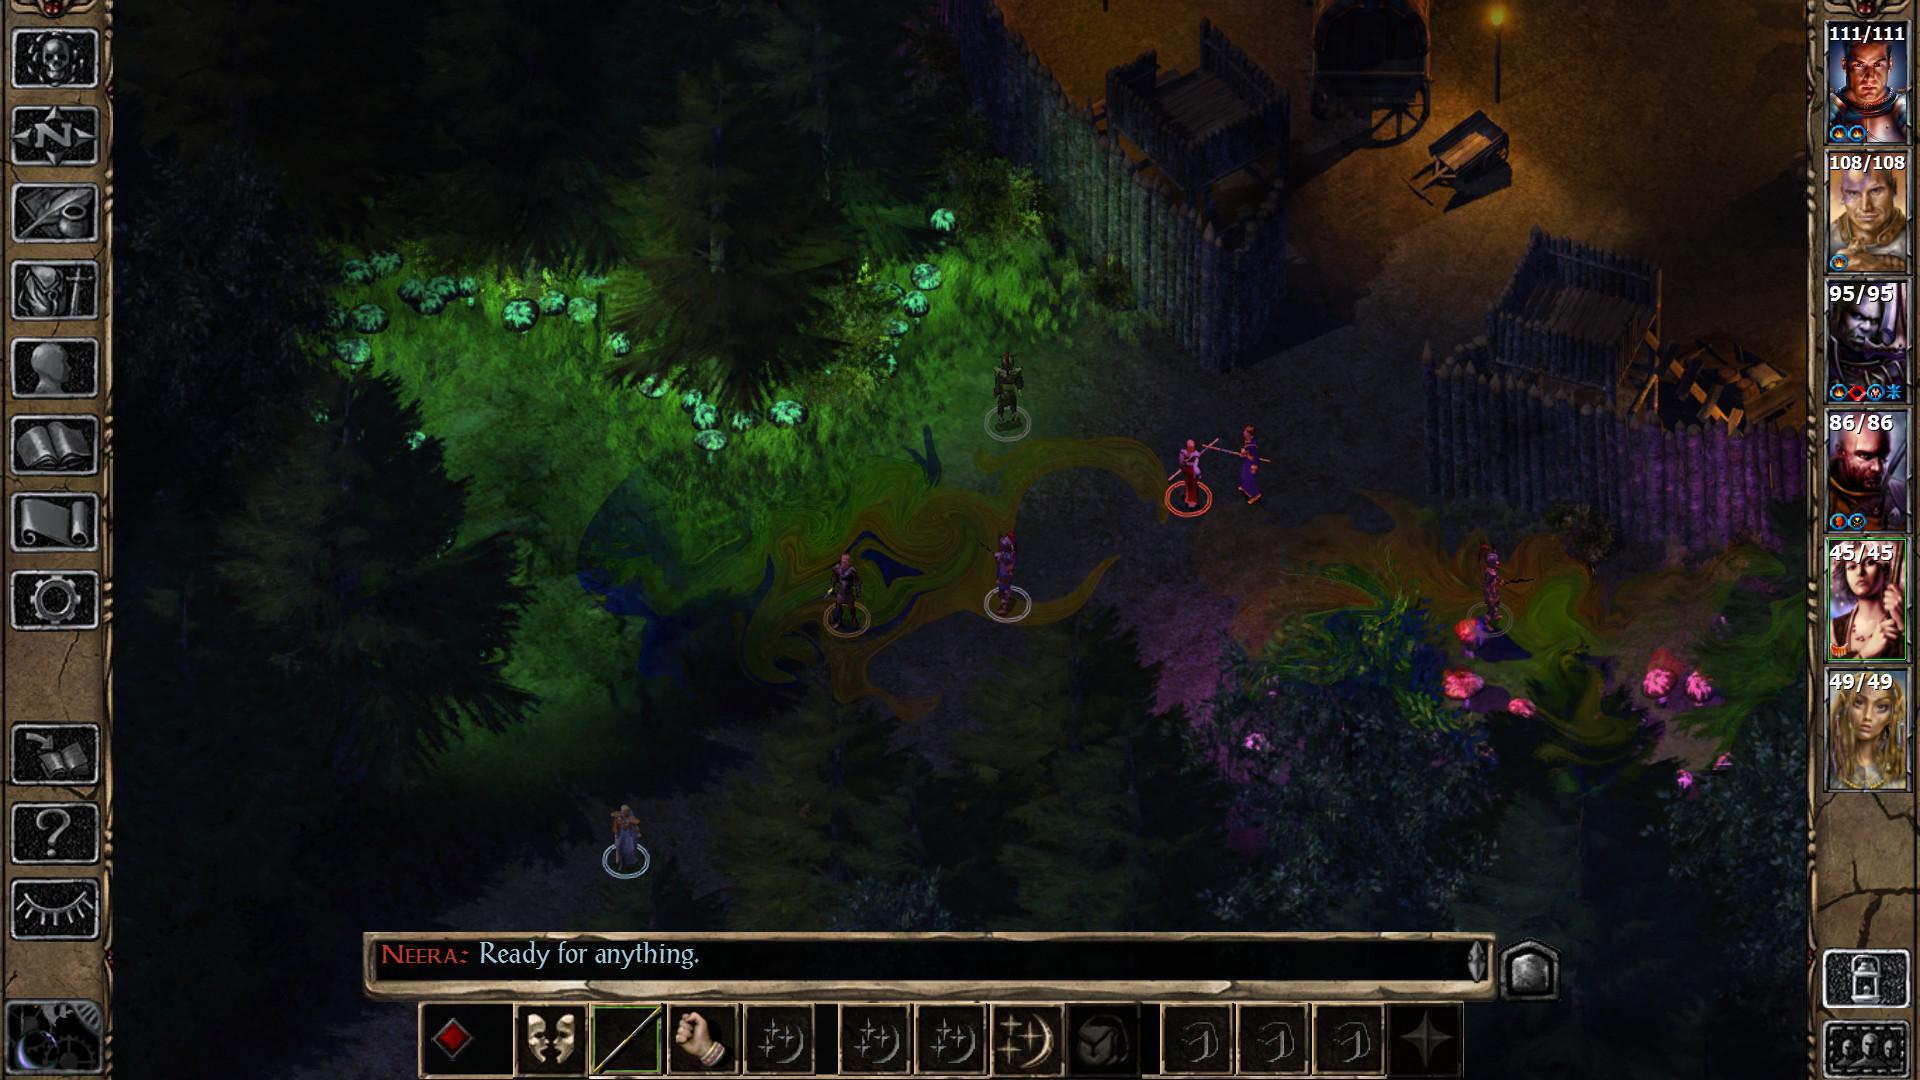 Screenshot №4 from game Baldur's Gate II: Enhanced Edition